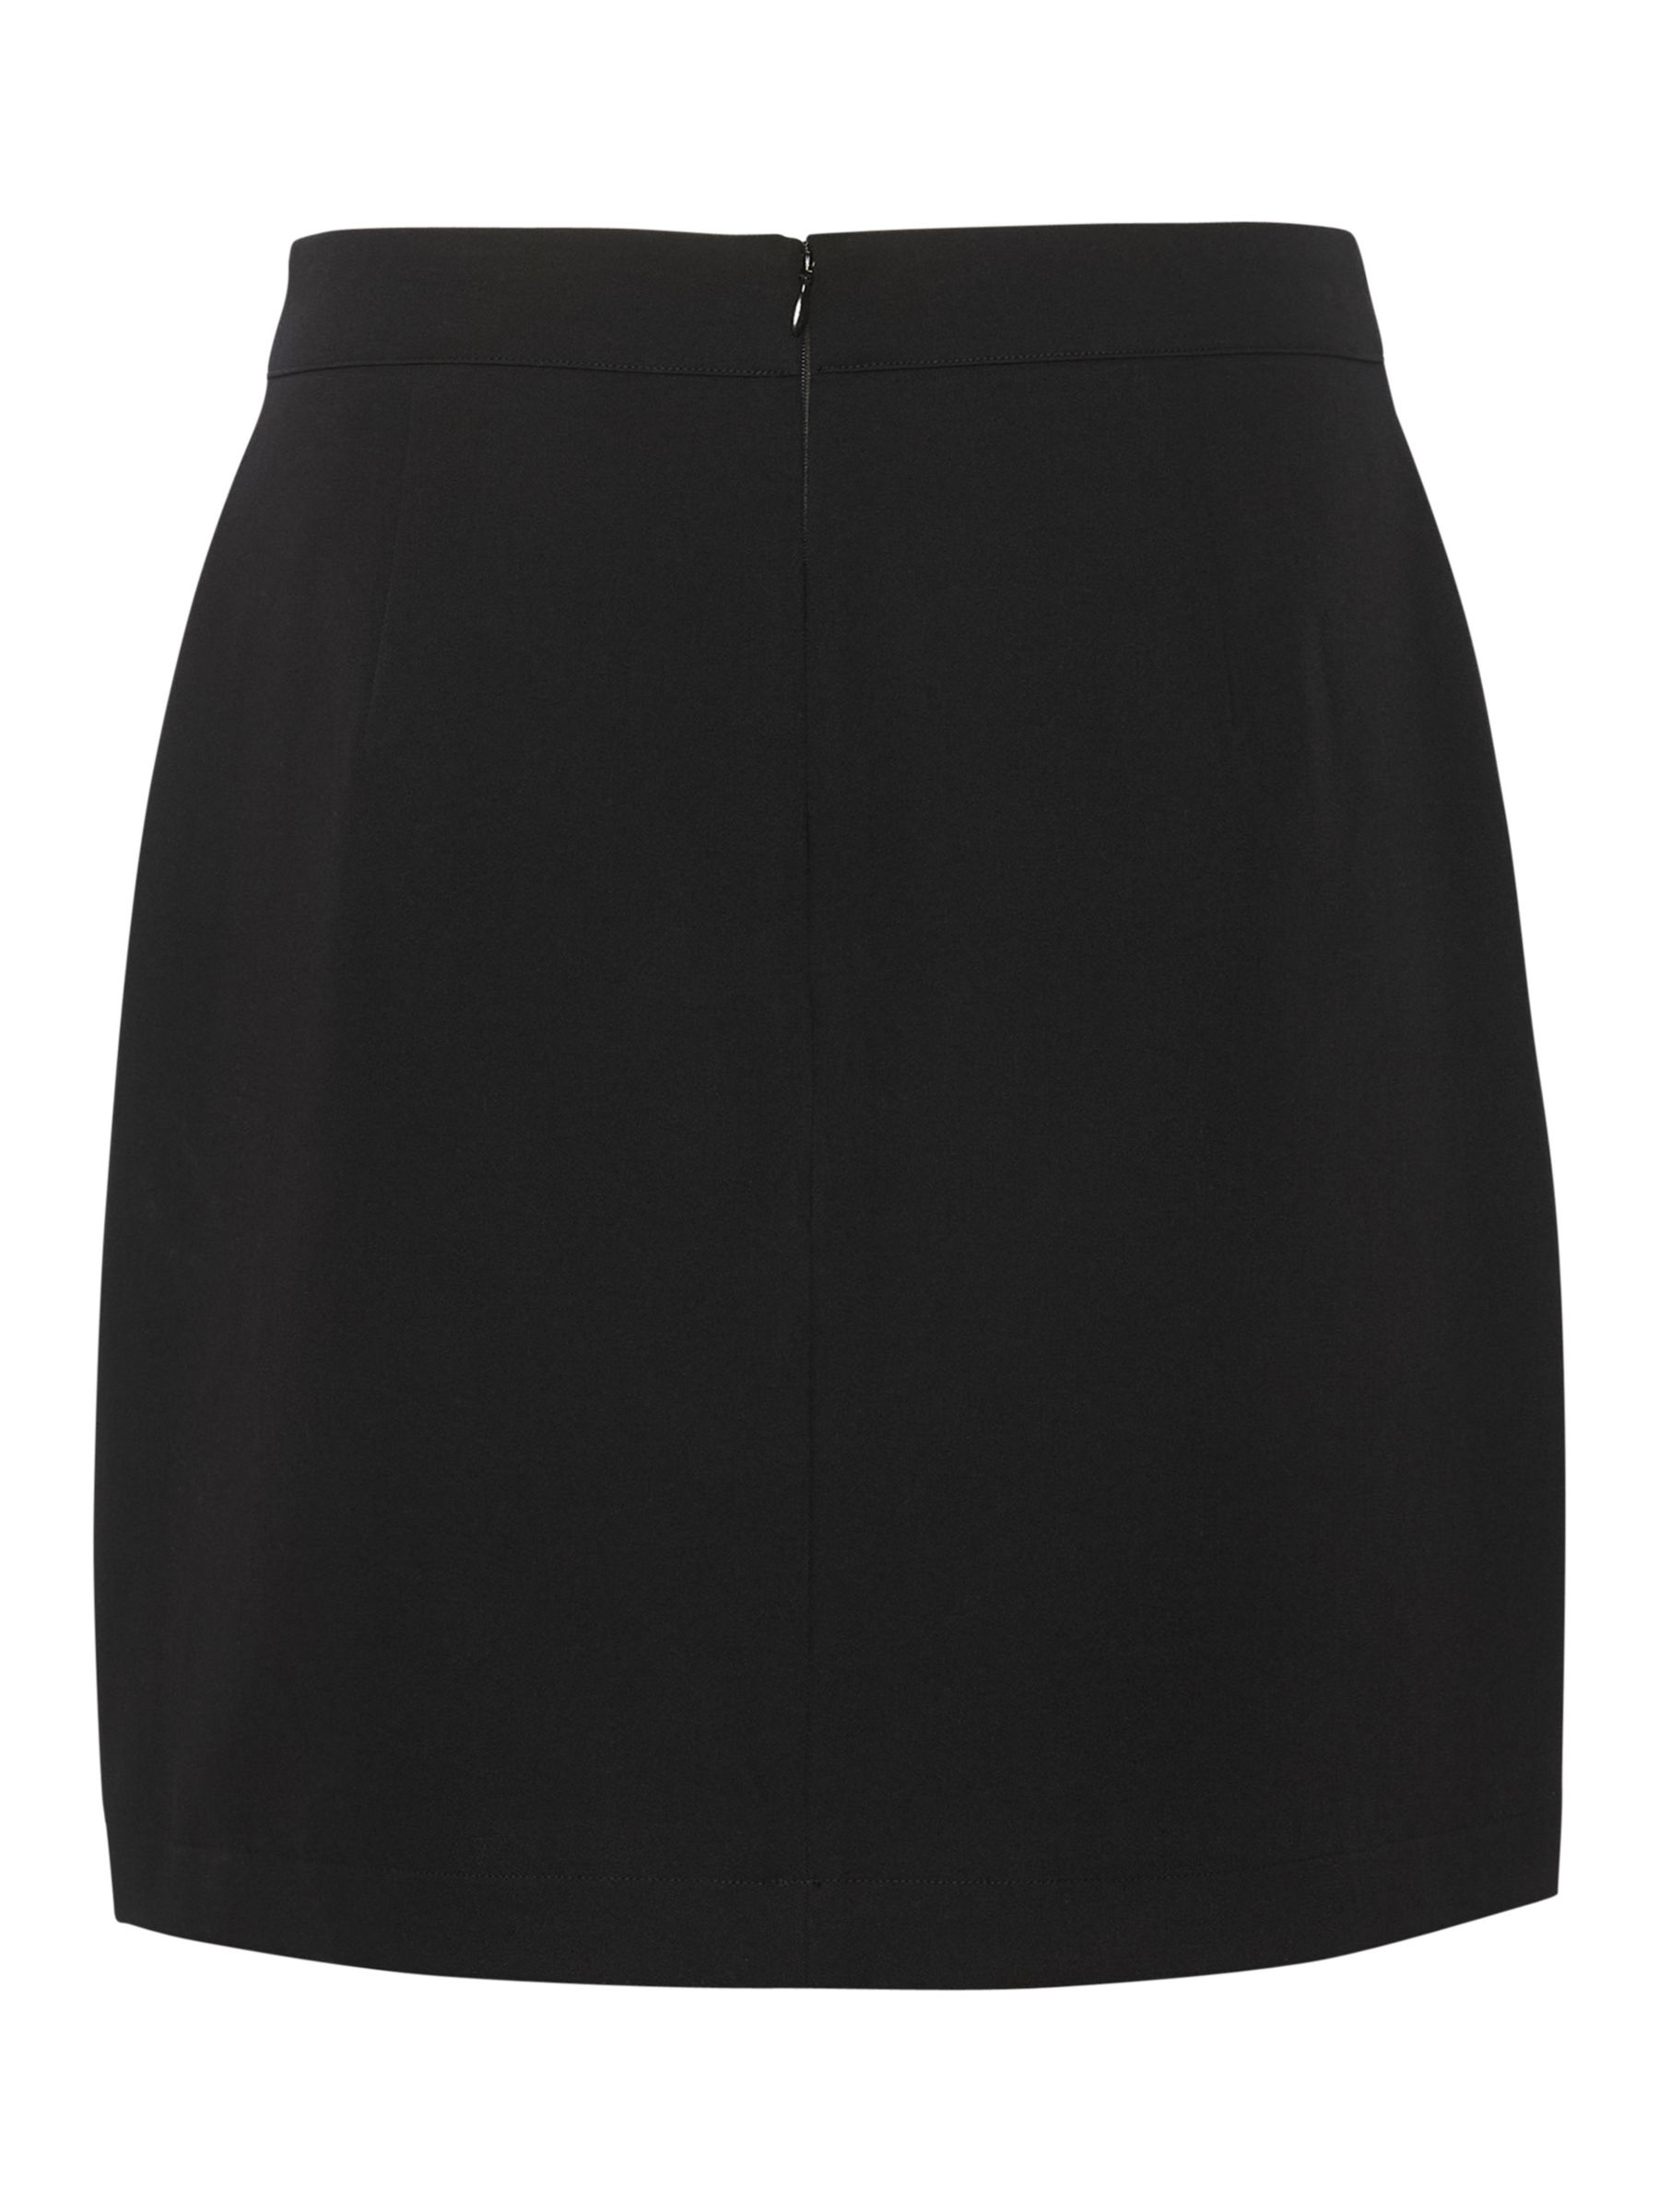 KAFFE Sakura High Waisted Mini Skirt, Black at John Lewis & Partners